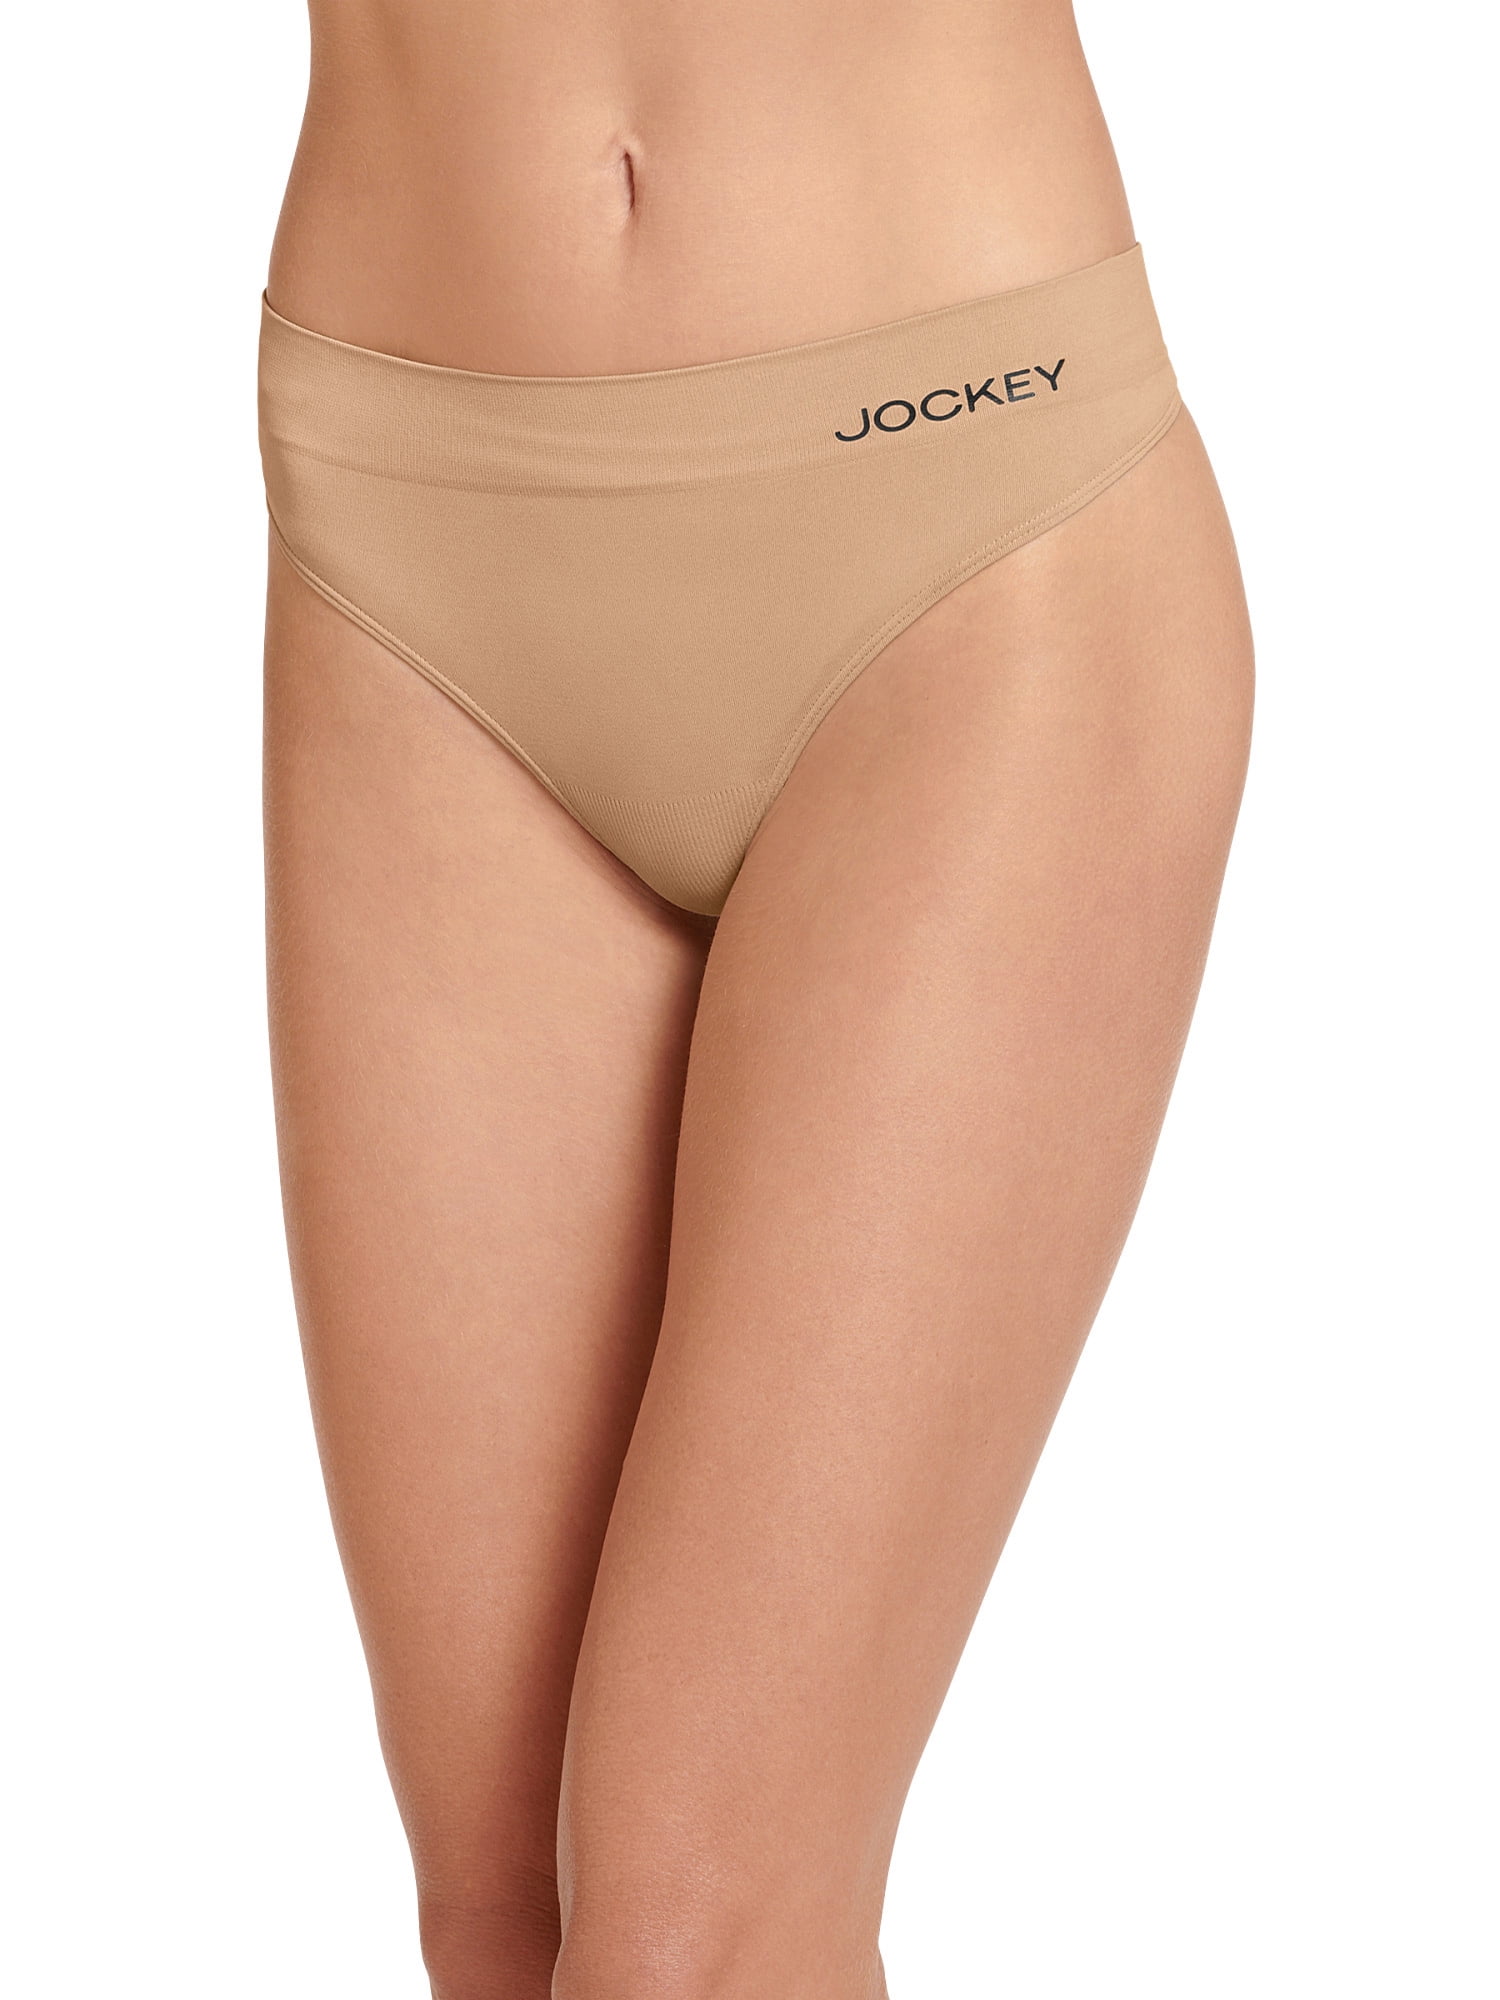 JockeyÆ Essentials Women's SeamfreeÆ Slimming Brief Panties